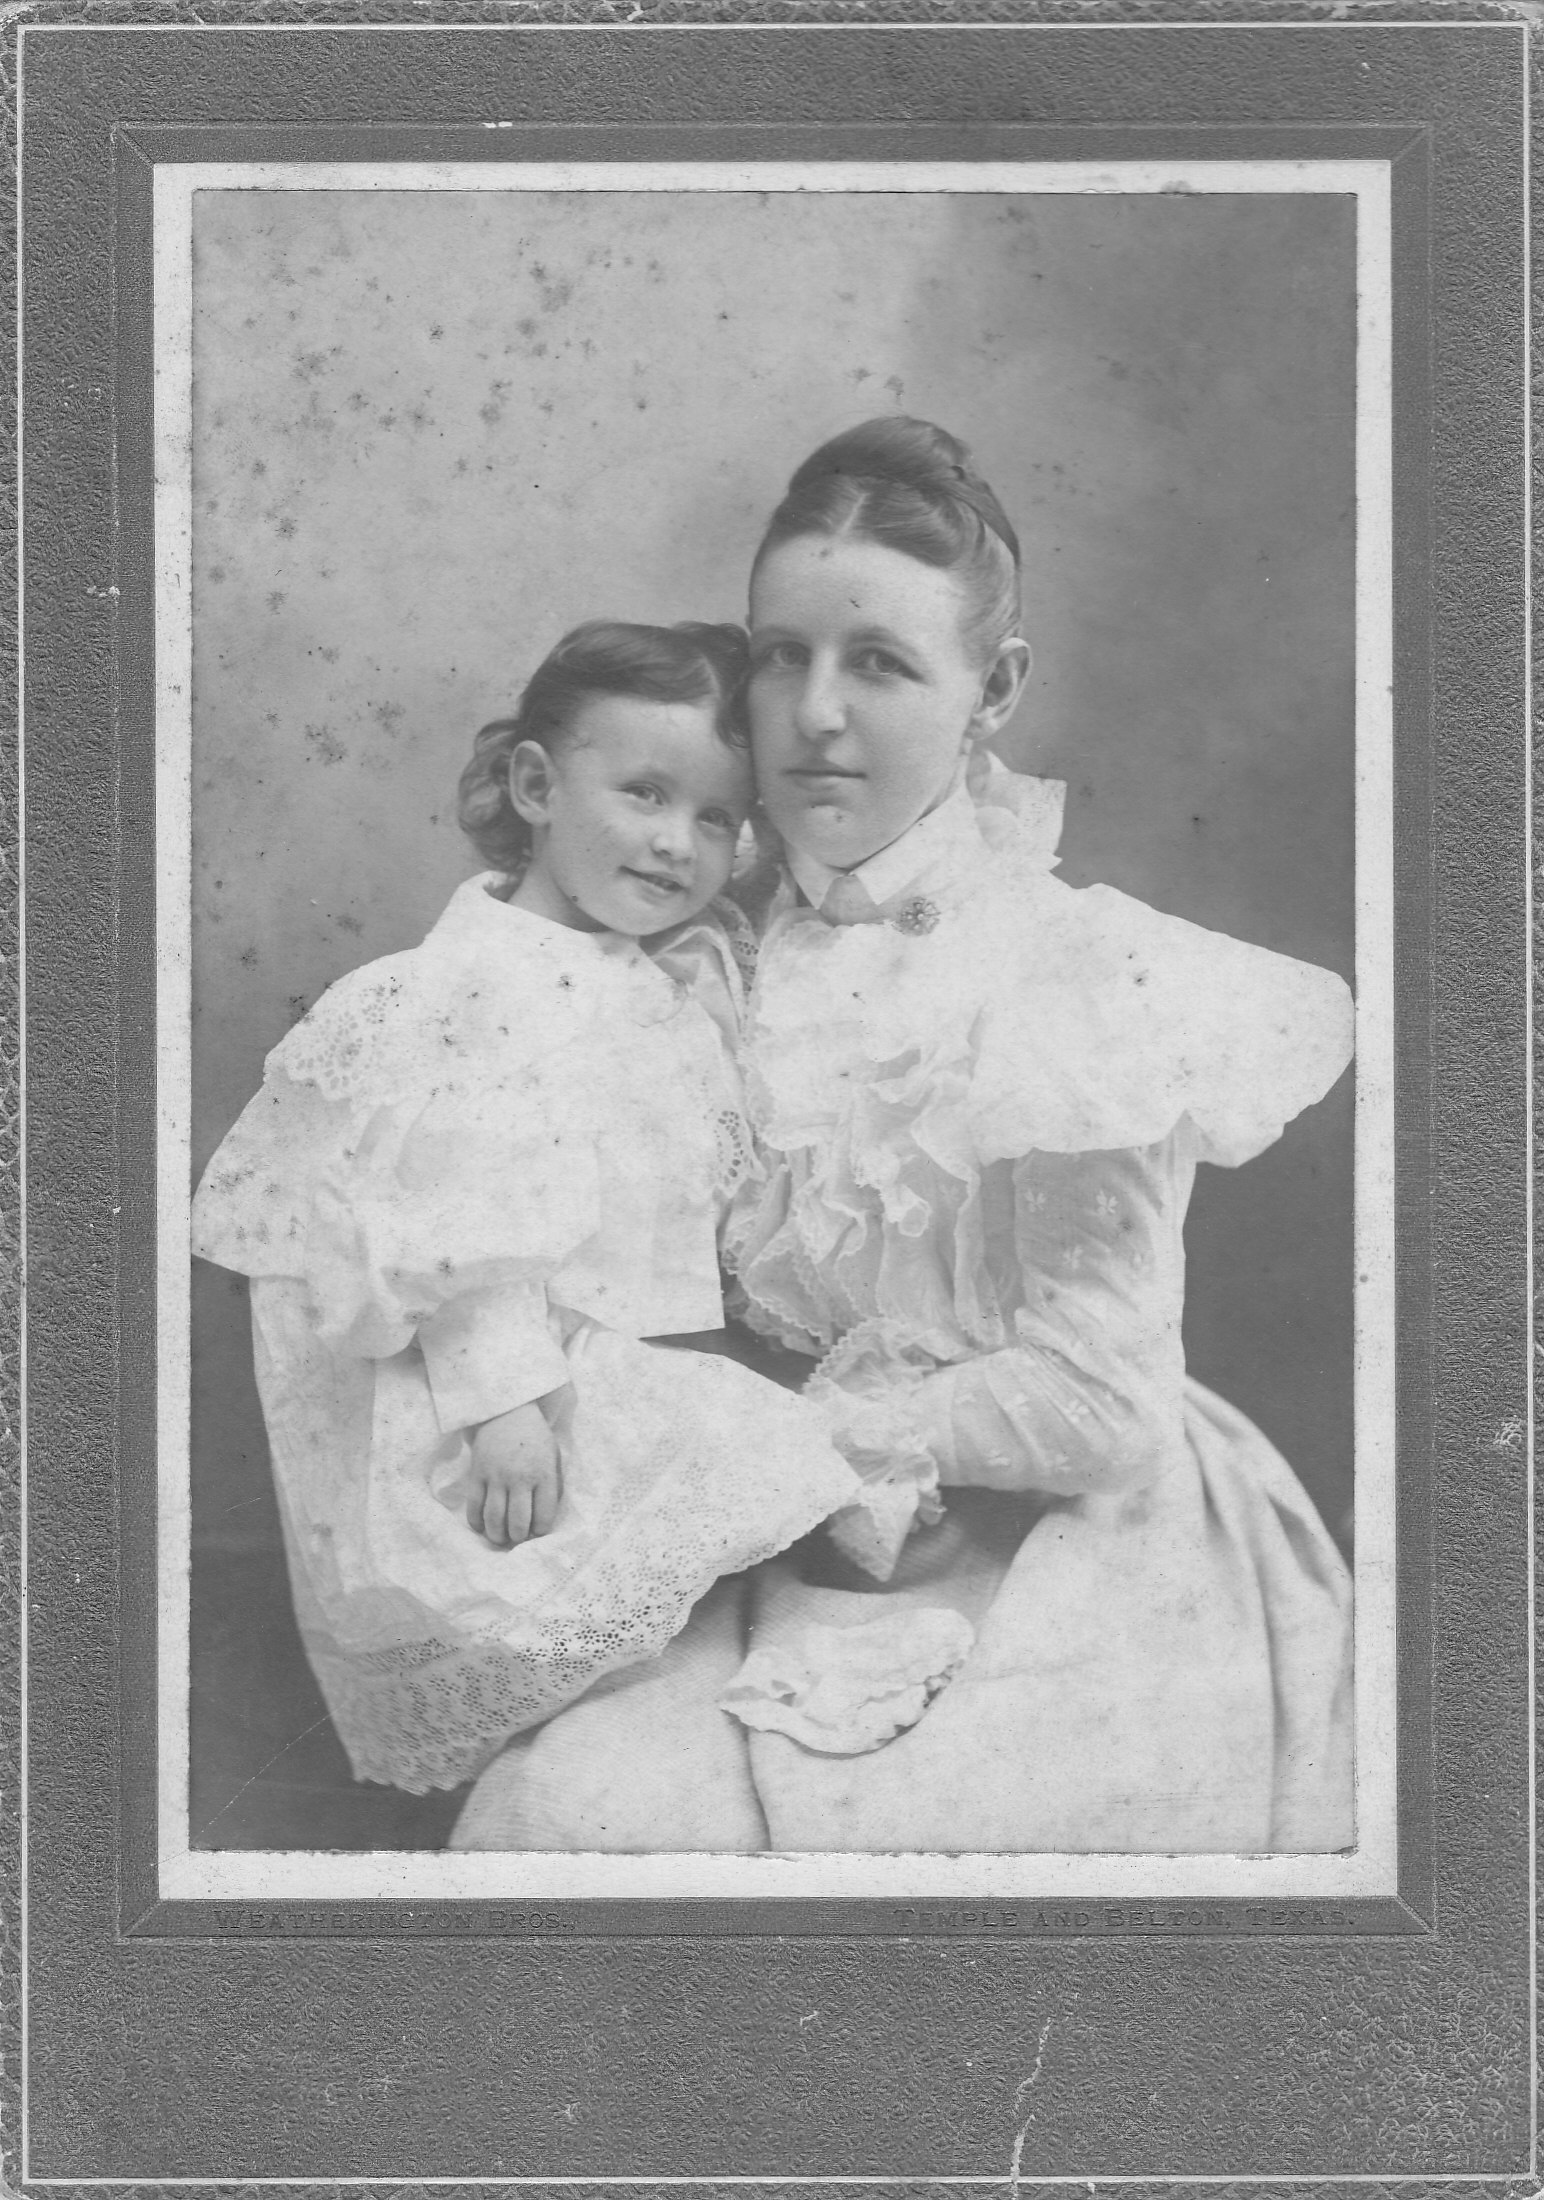 087: Minnie Martin Hefley - (my great grandmother) - Aug 20, 1897, Mary Lee (my grandmother)